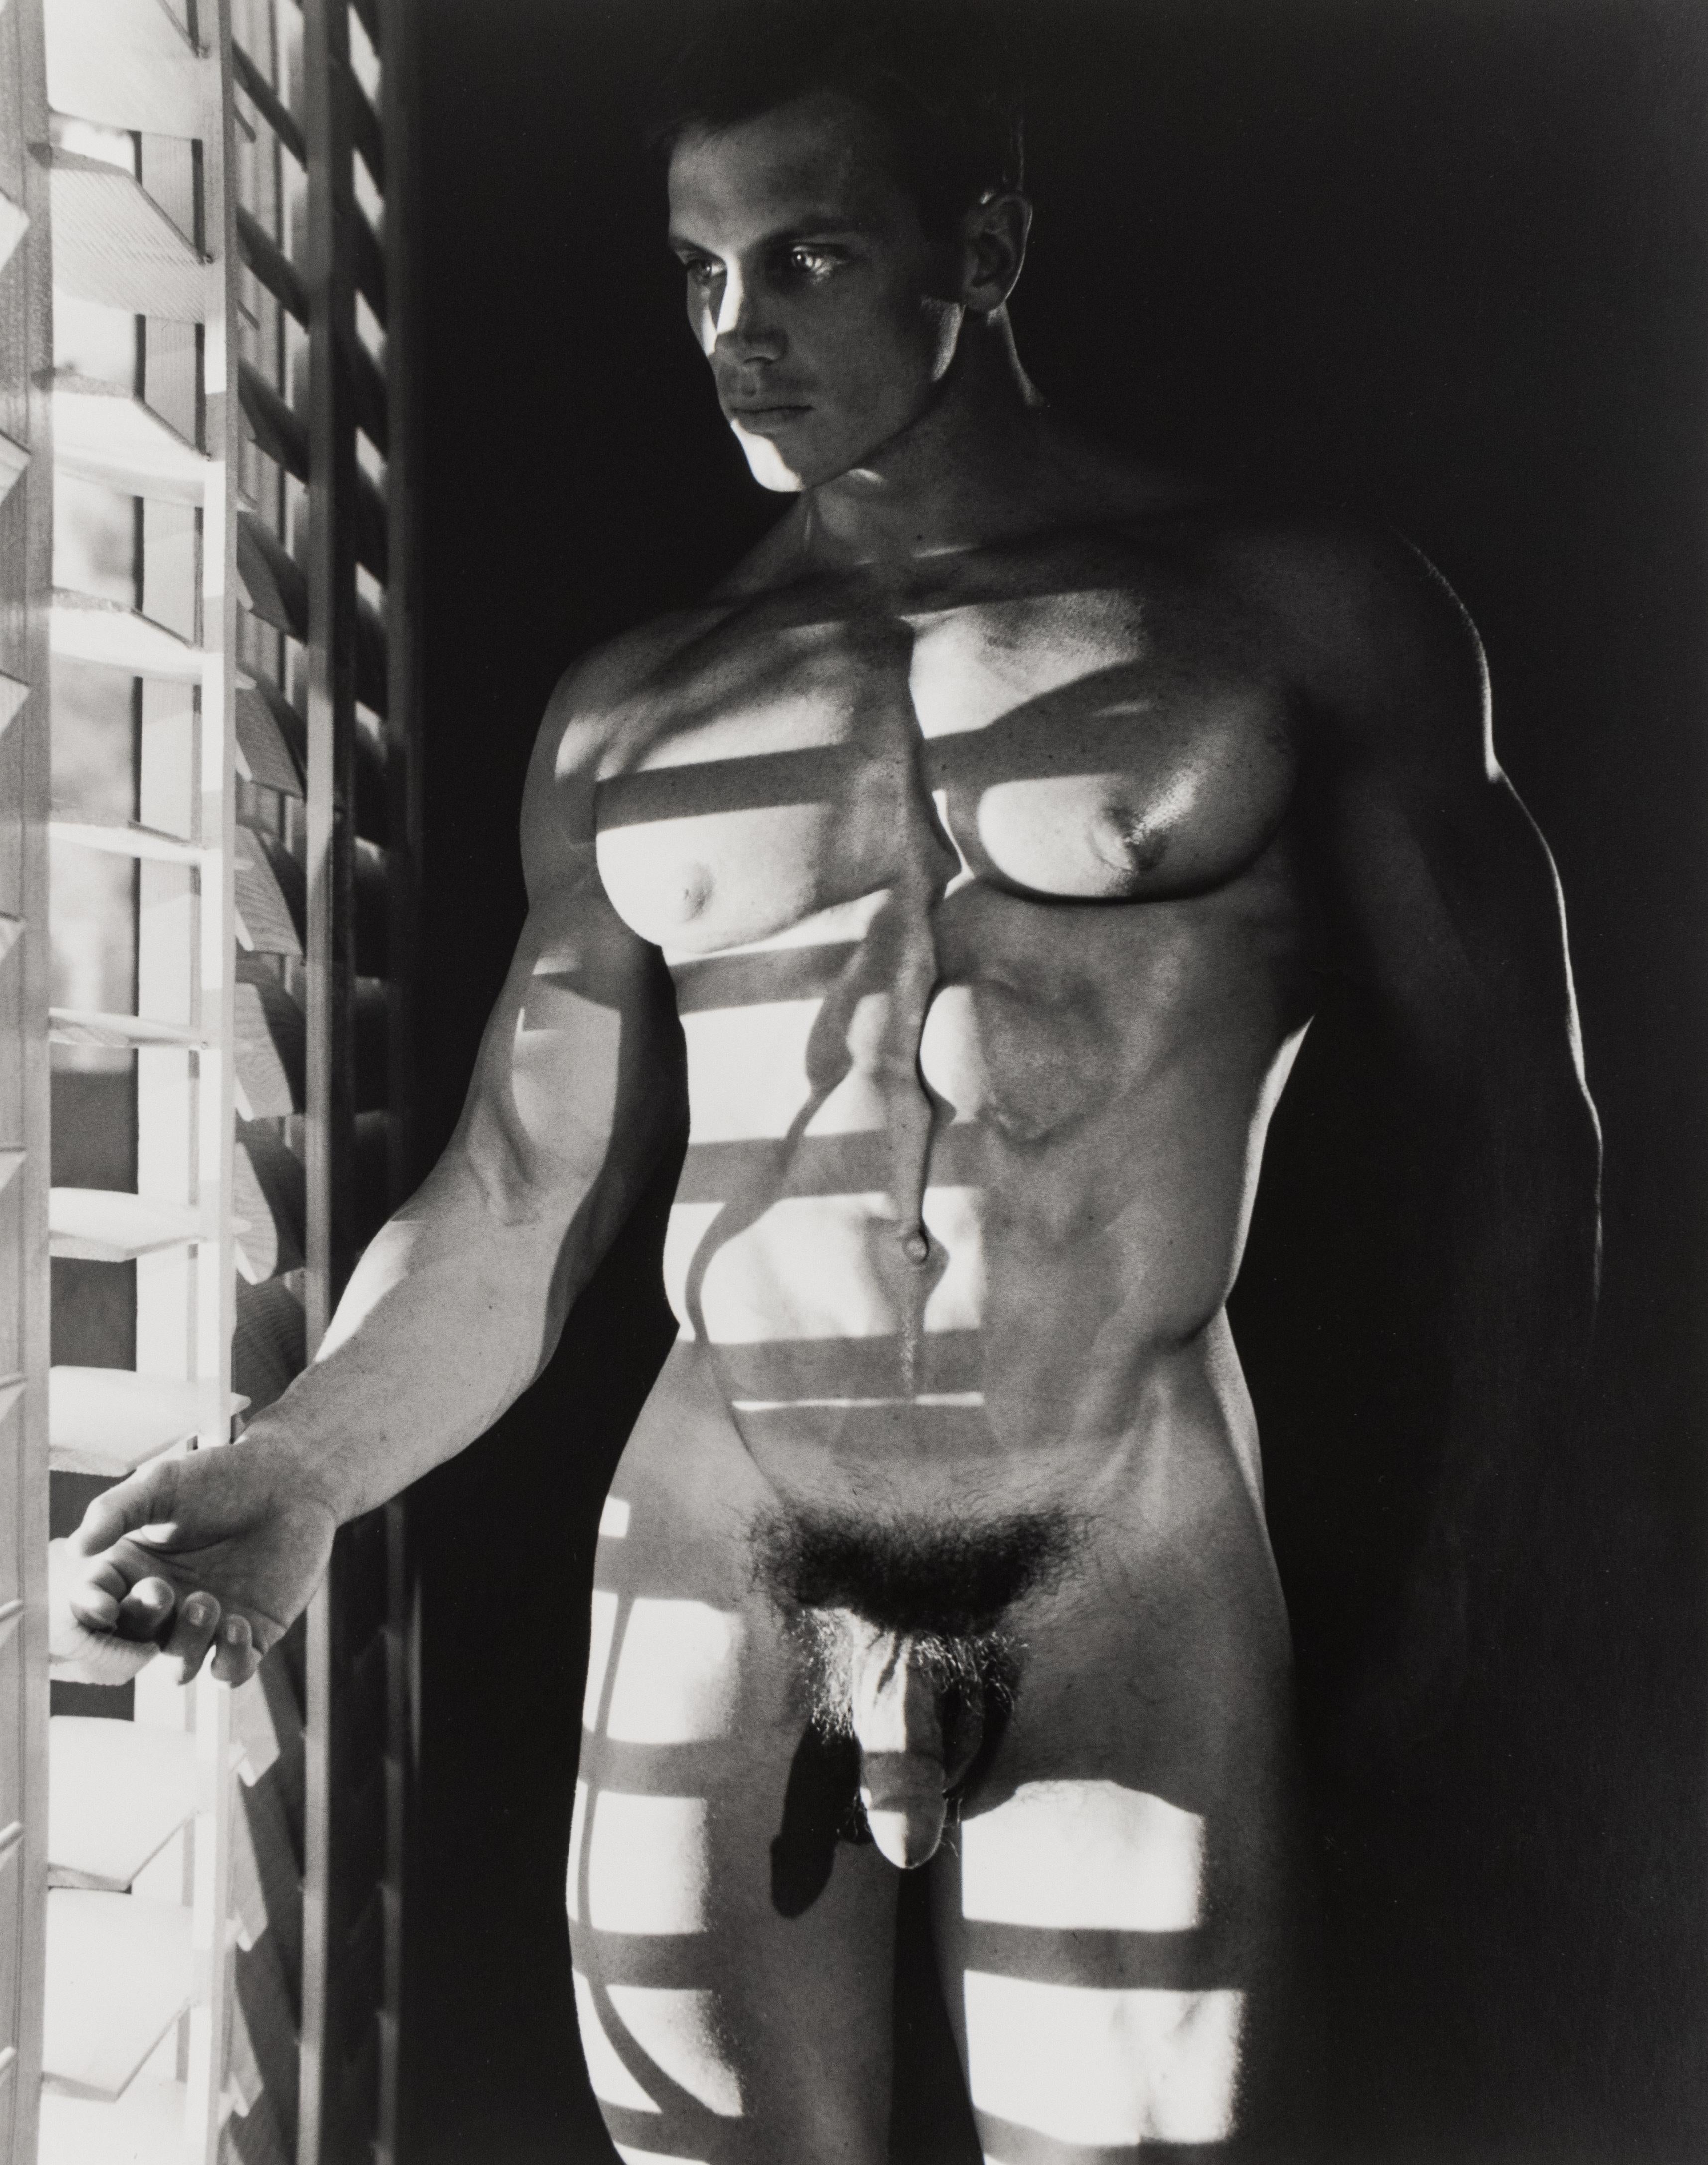 Jim French Nude Photograph - John Pruitt, Palm Springs, 1983